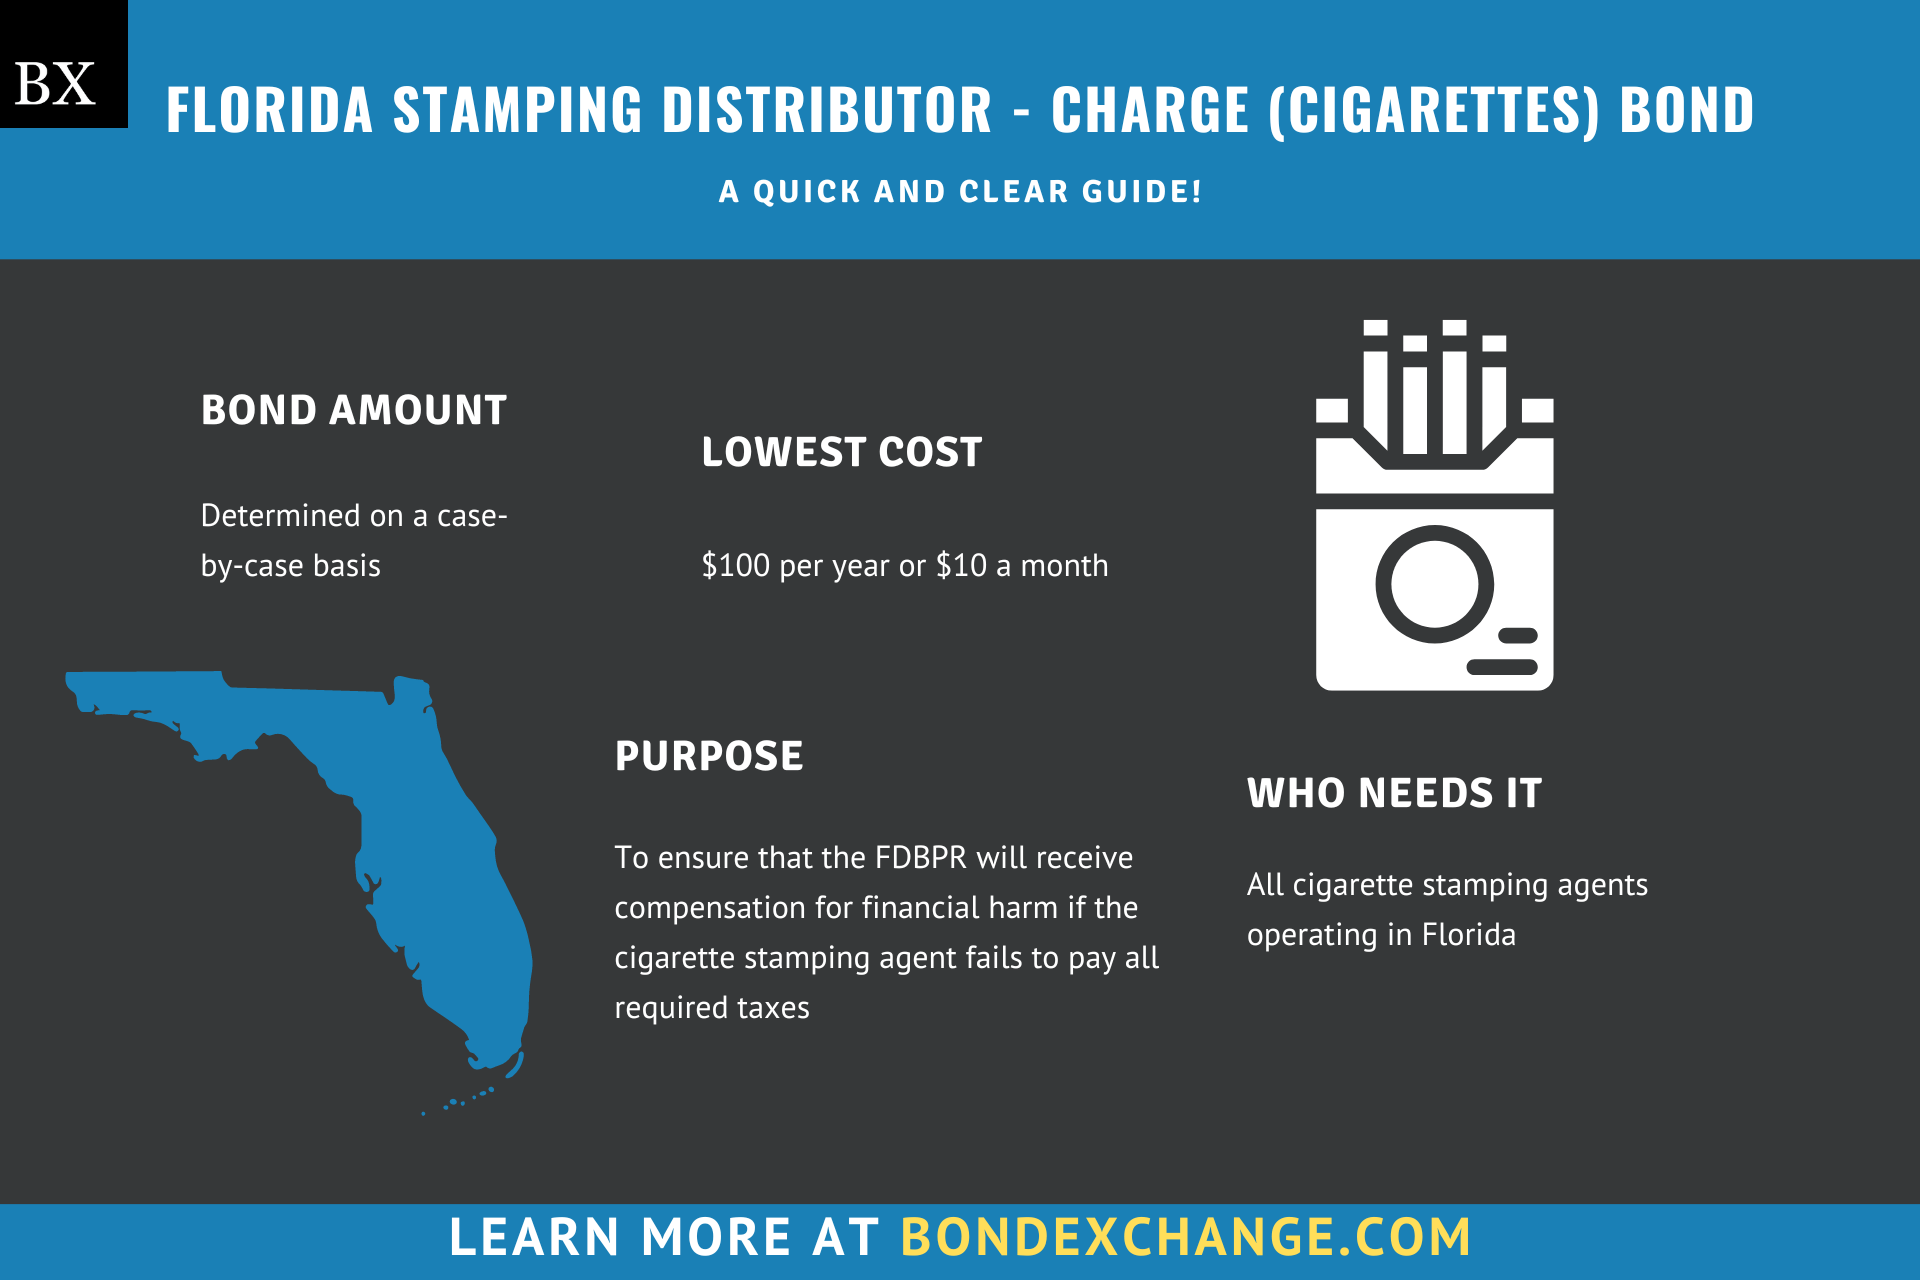 Florida Stamping Distributor - Charge (Cigarettes) Bond